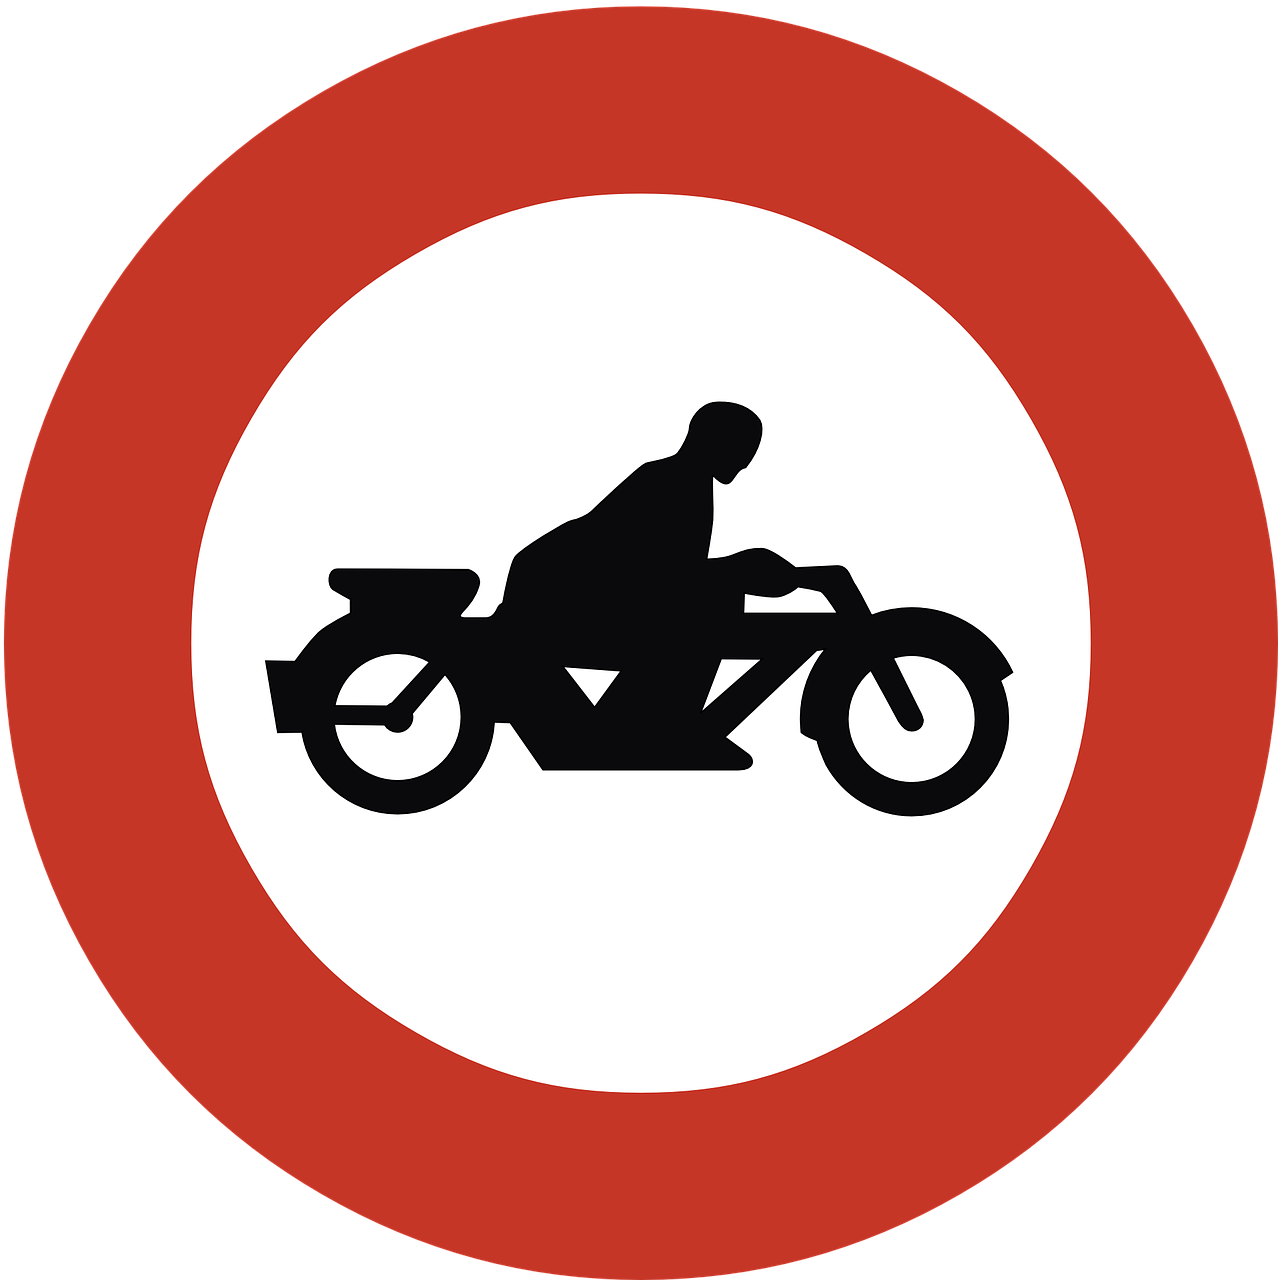 ban motorcycles forbidden free photo